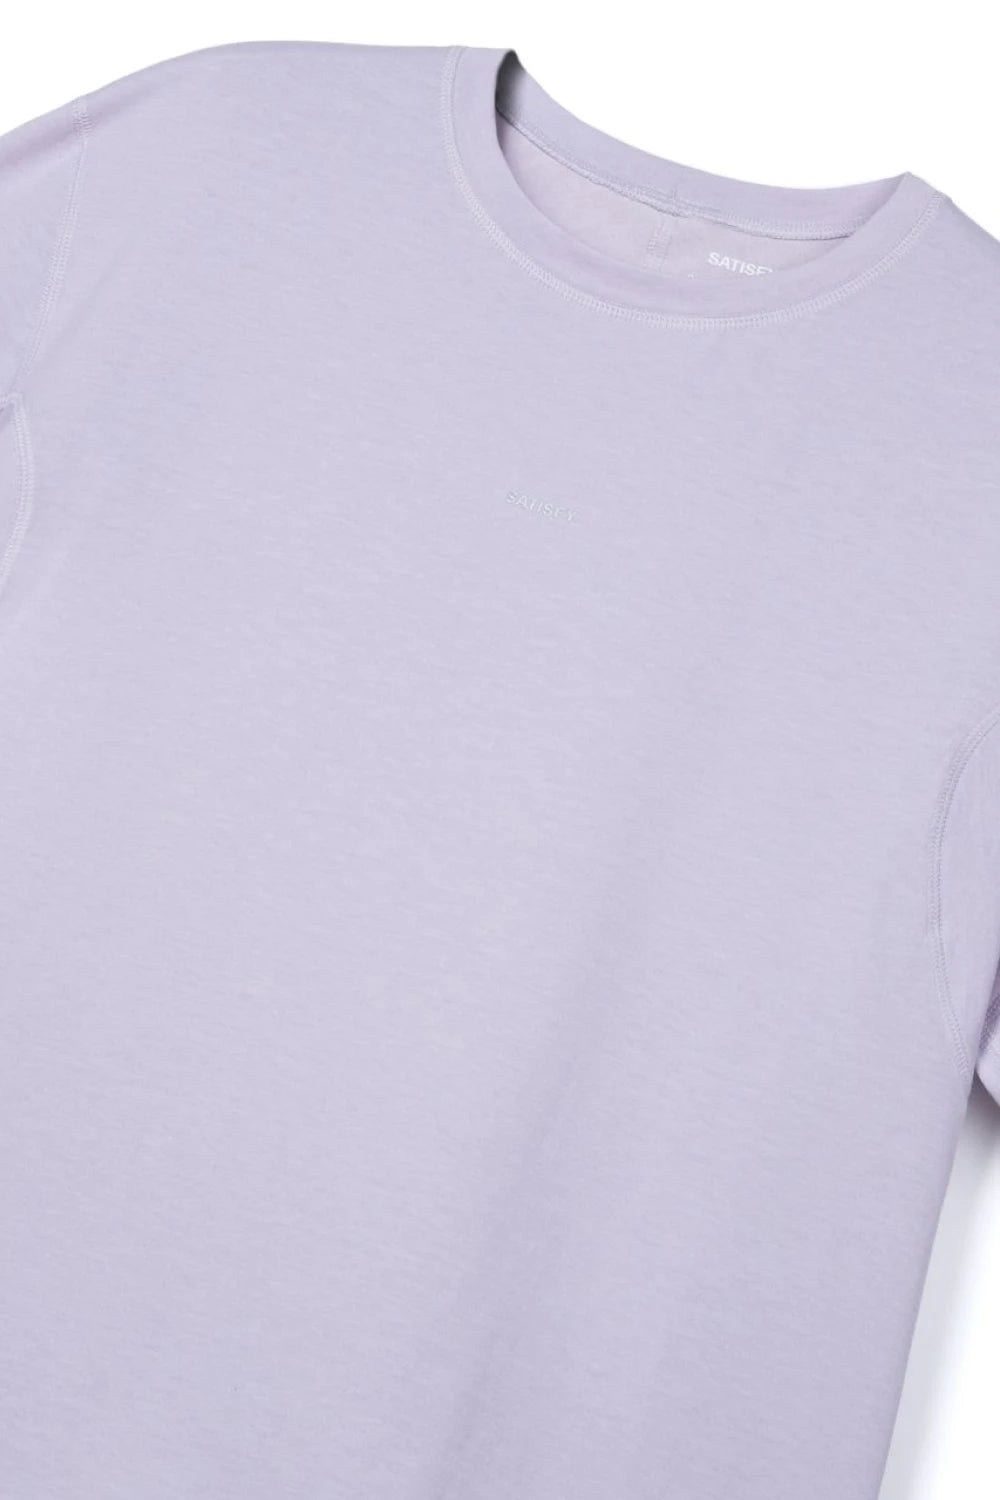 Satisfy SoftCell™ Cordura Climb T-Shirt - Lilac